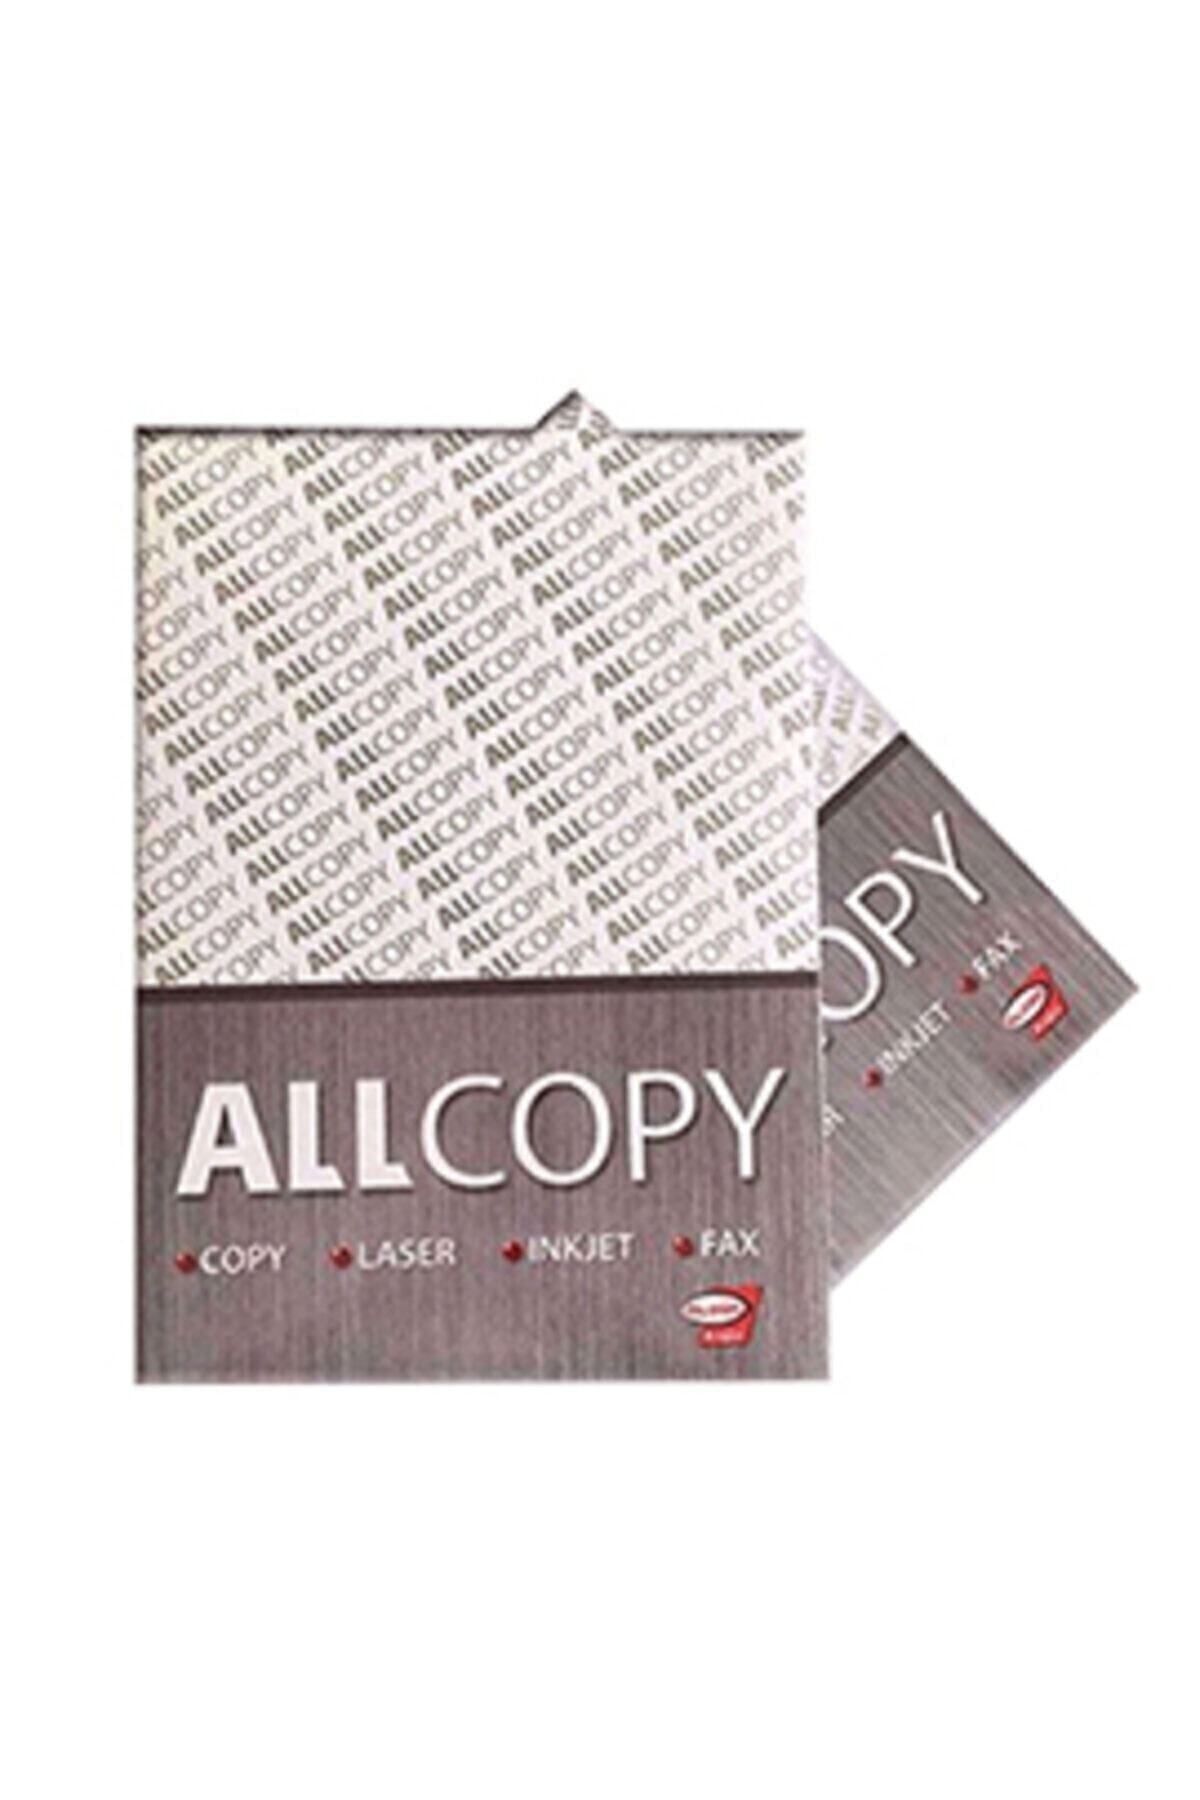 Alkim Kağıt Fotokopi Kağıdı A4- 1top-500sayfa - 80g/m2 (21x29,7)a4 Kağıdı